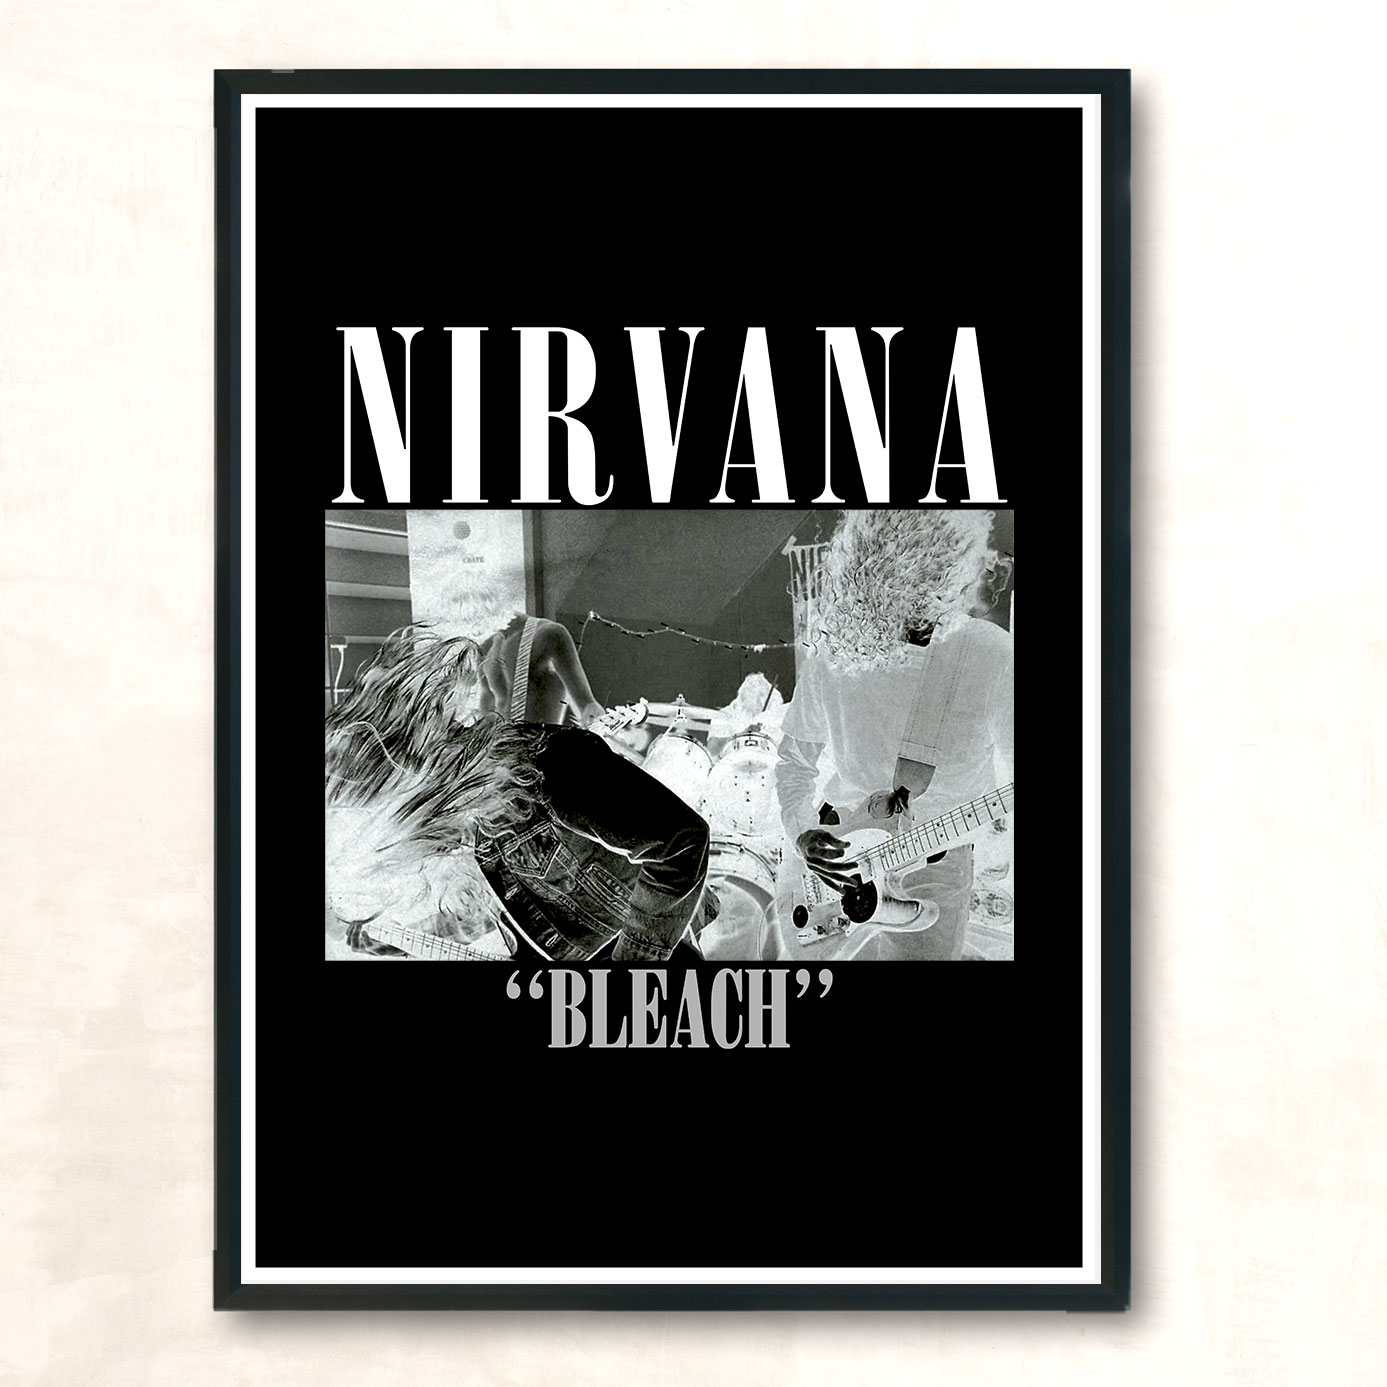 Vintage Rare Nirvana Bleach Kurt Cobain Sweatshirt 